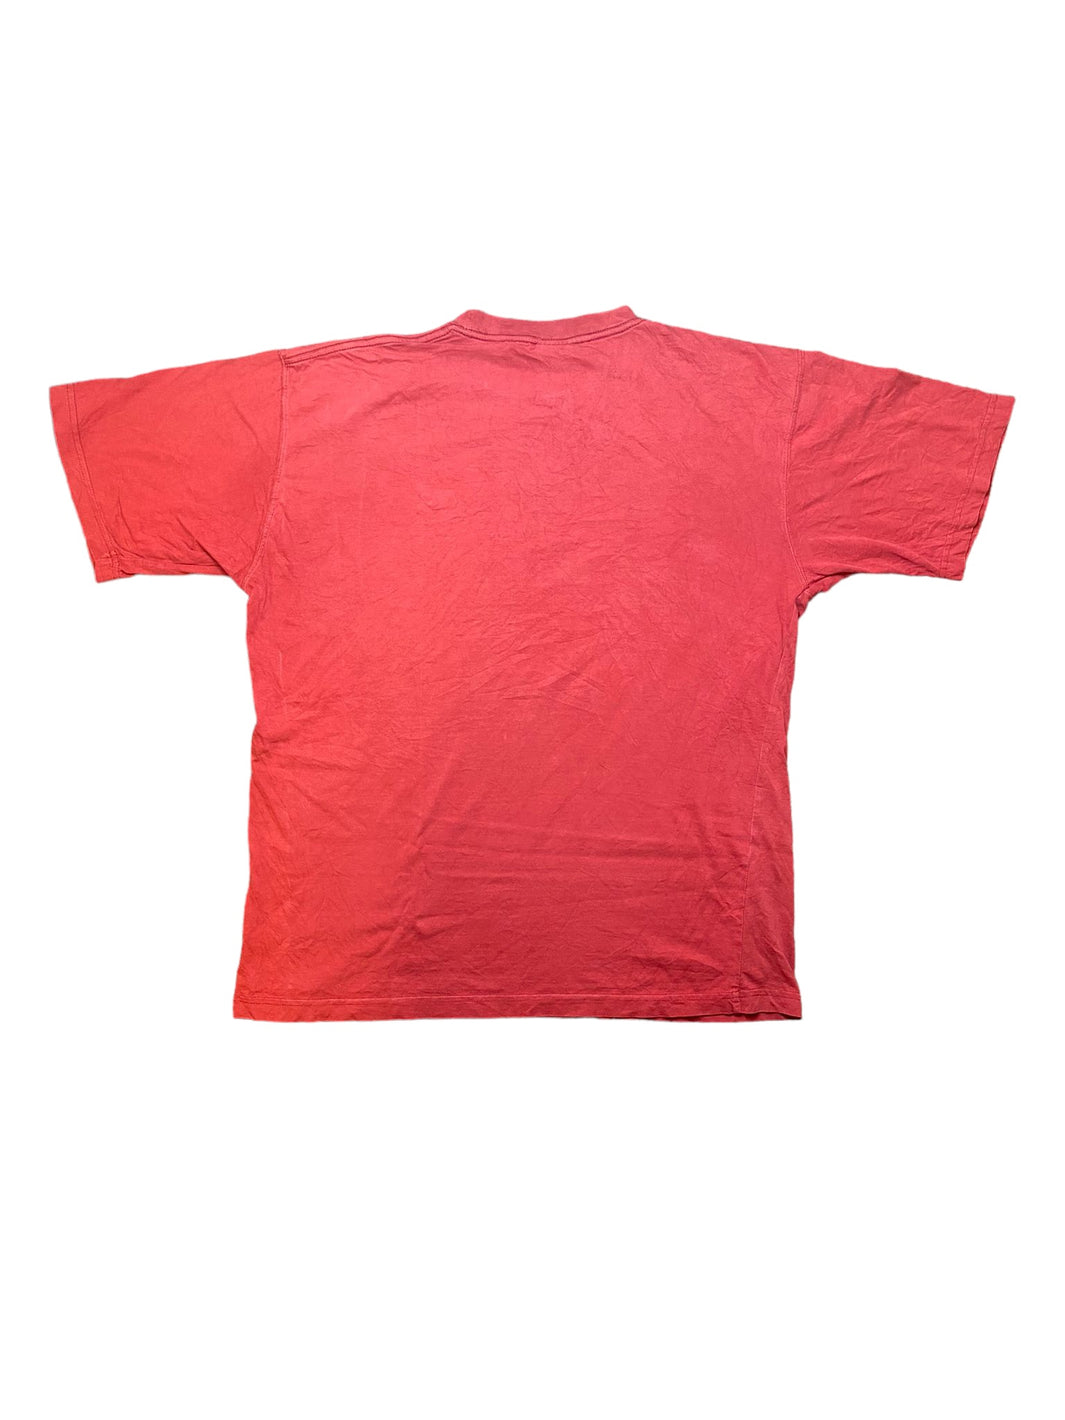 Reebok Shirt embroidered